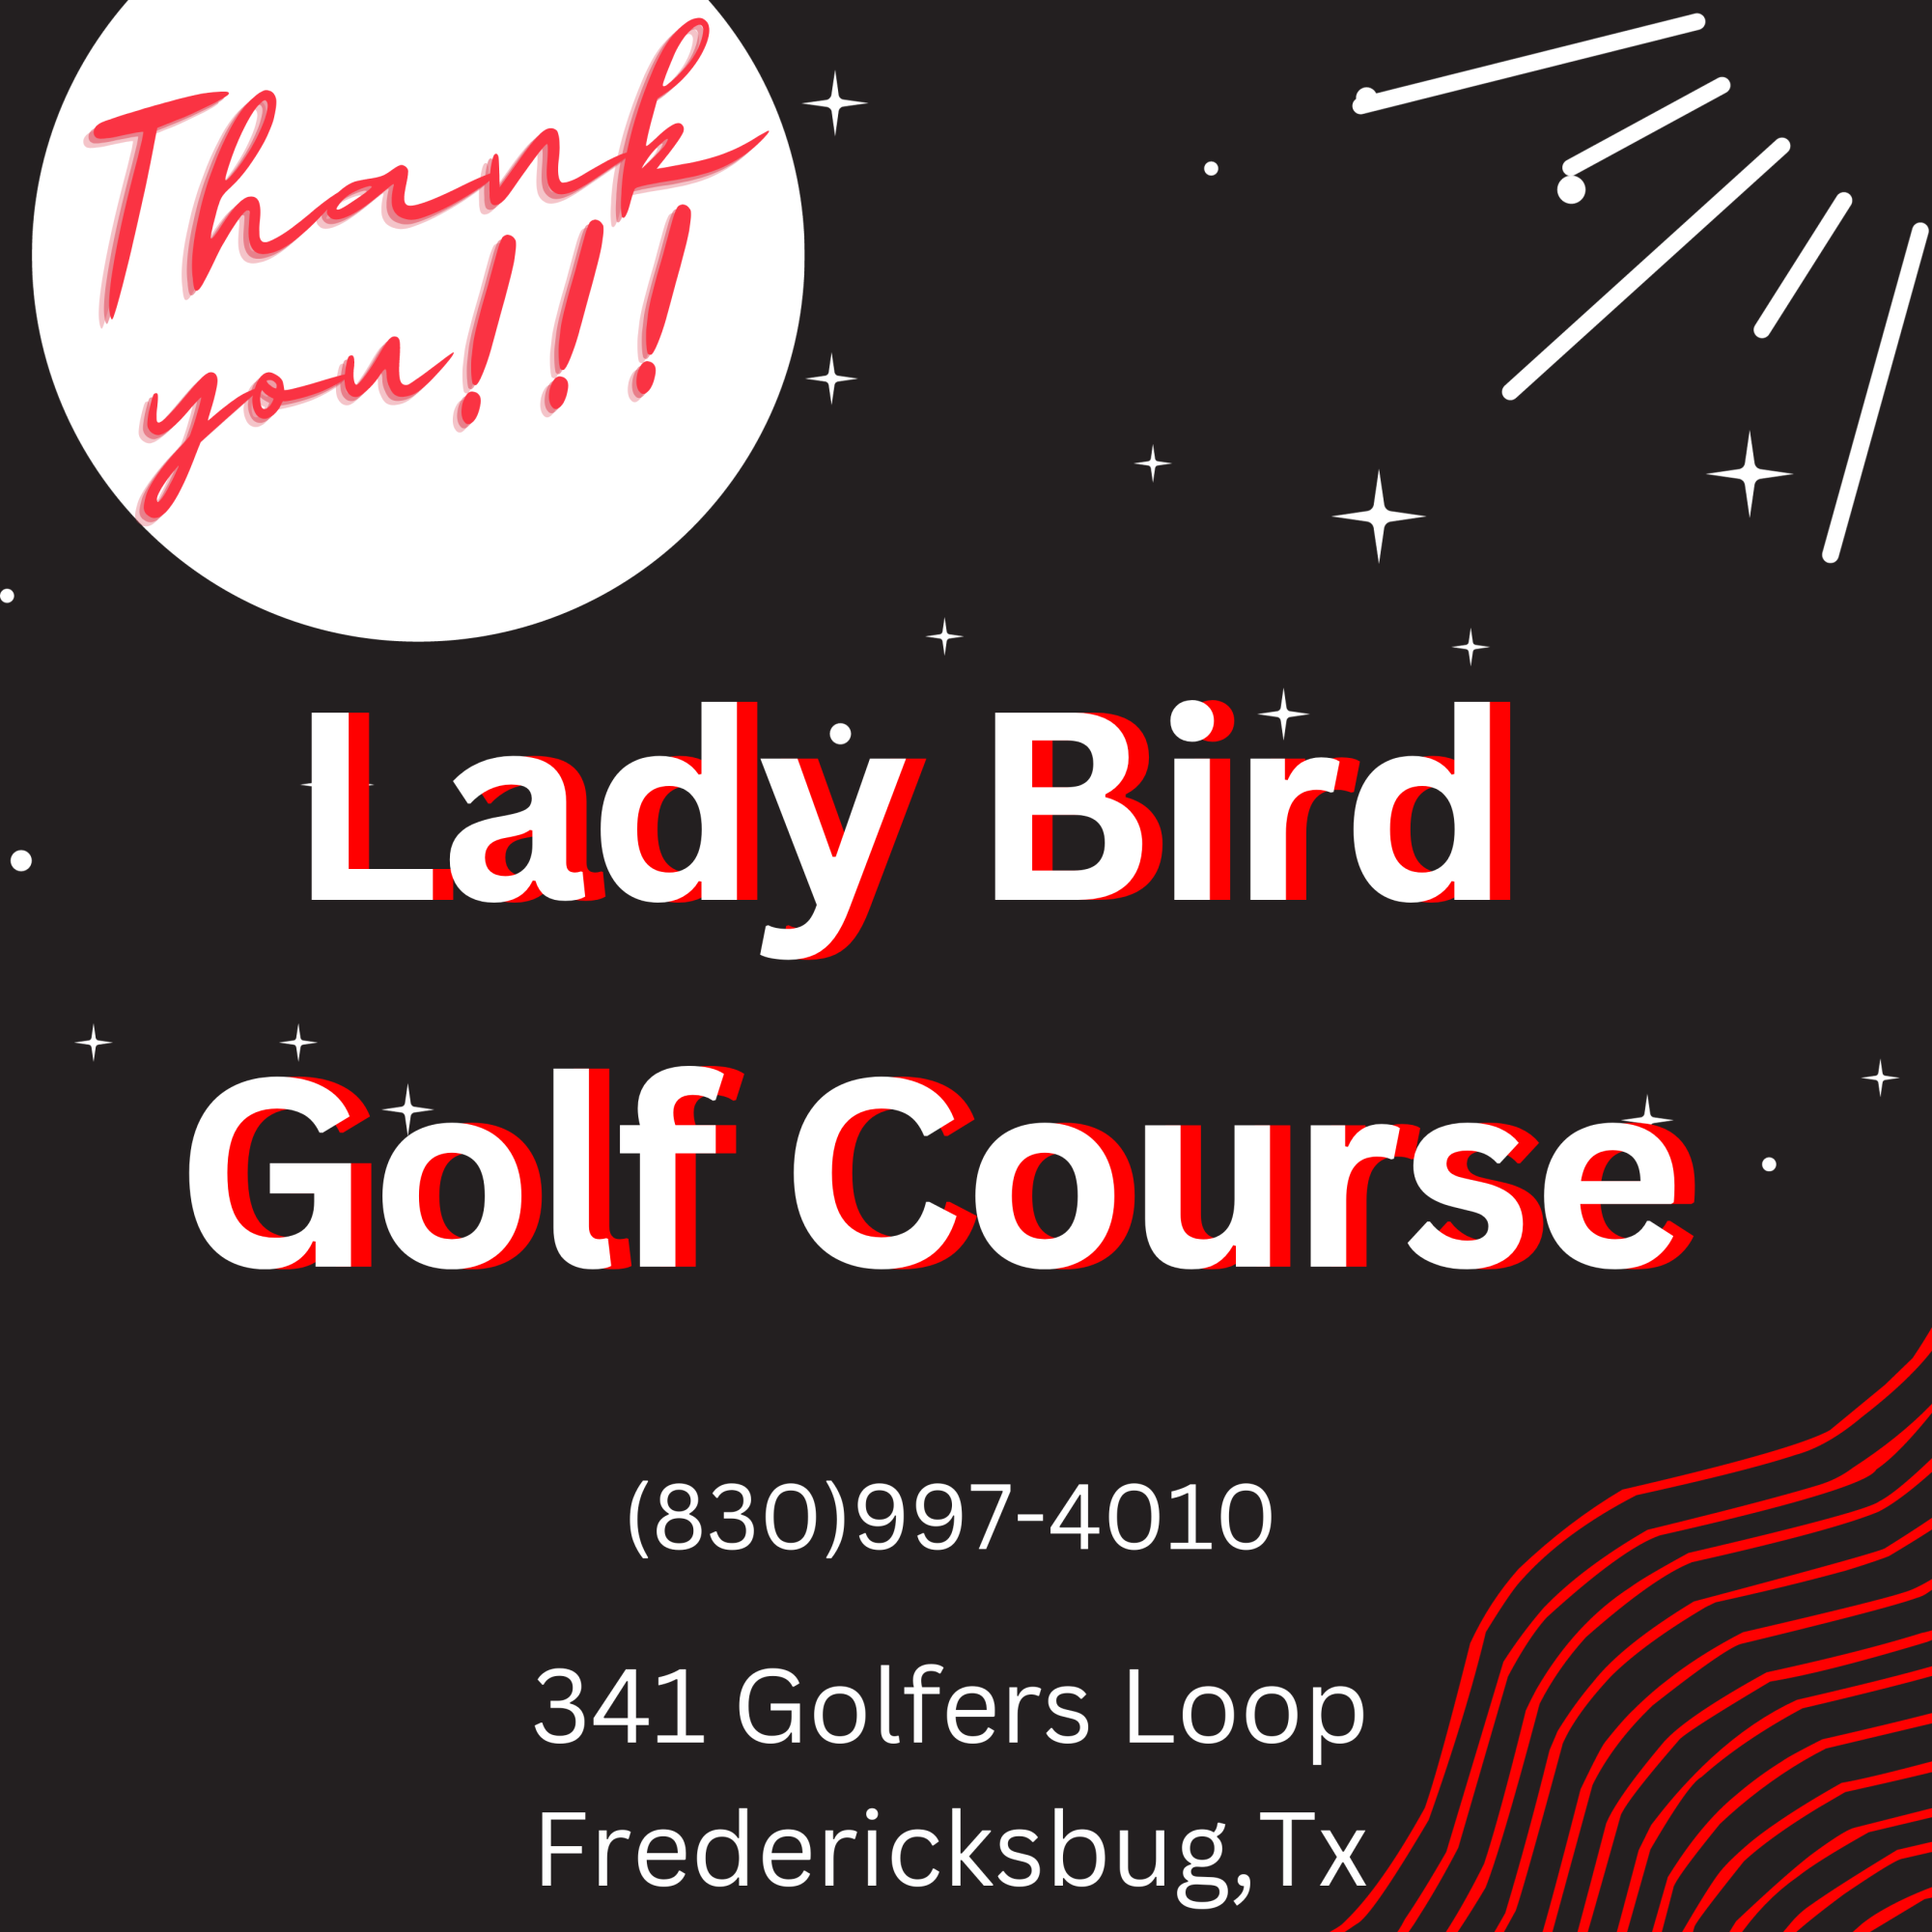 Lady Bird Gold Course